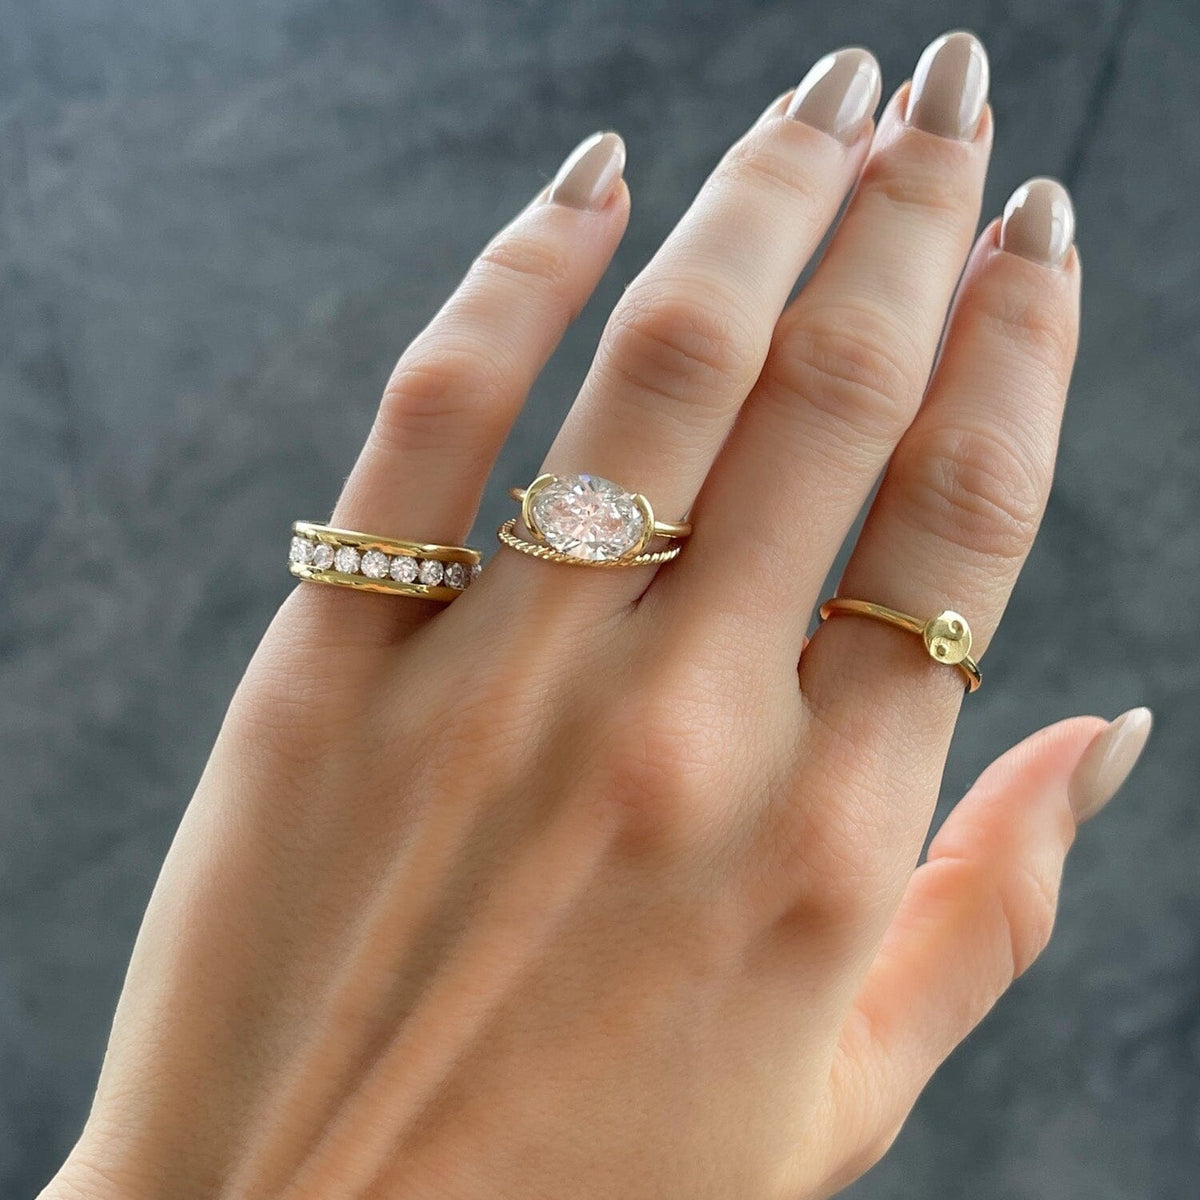 3-Stone Channel Set Diamond Engagement Ring 18K White Gold: +$240